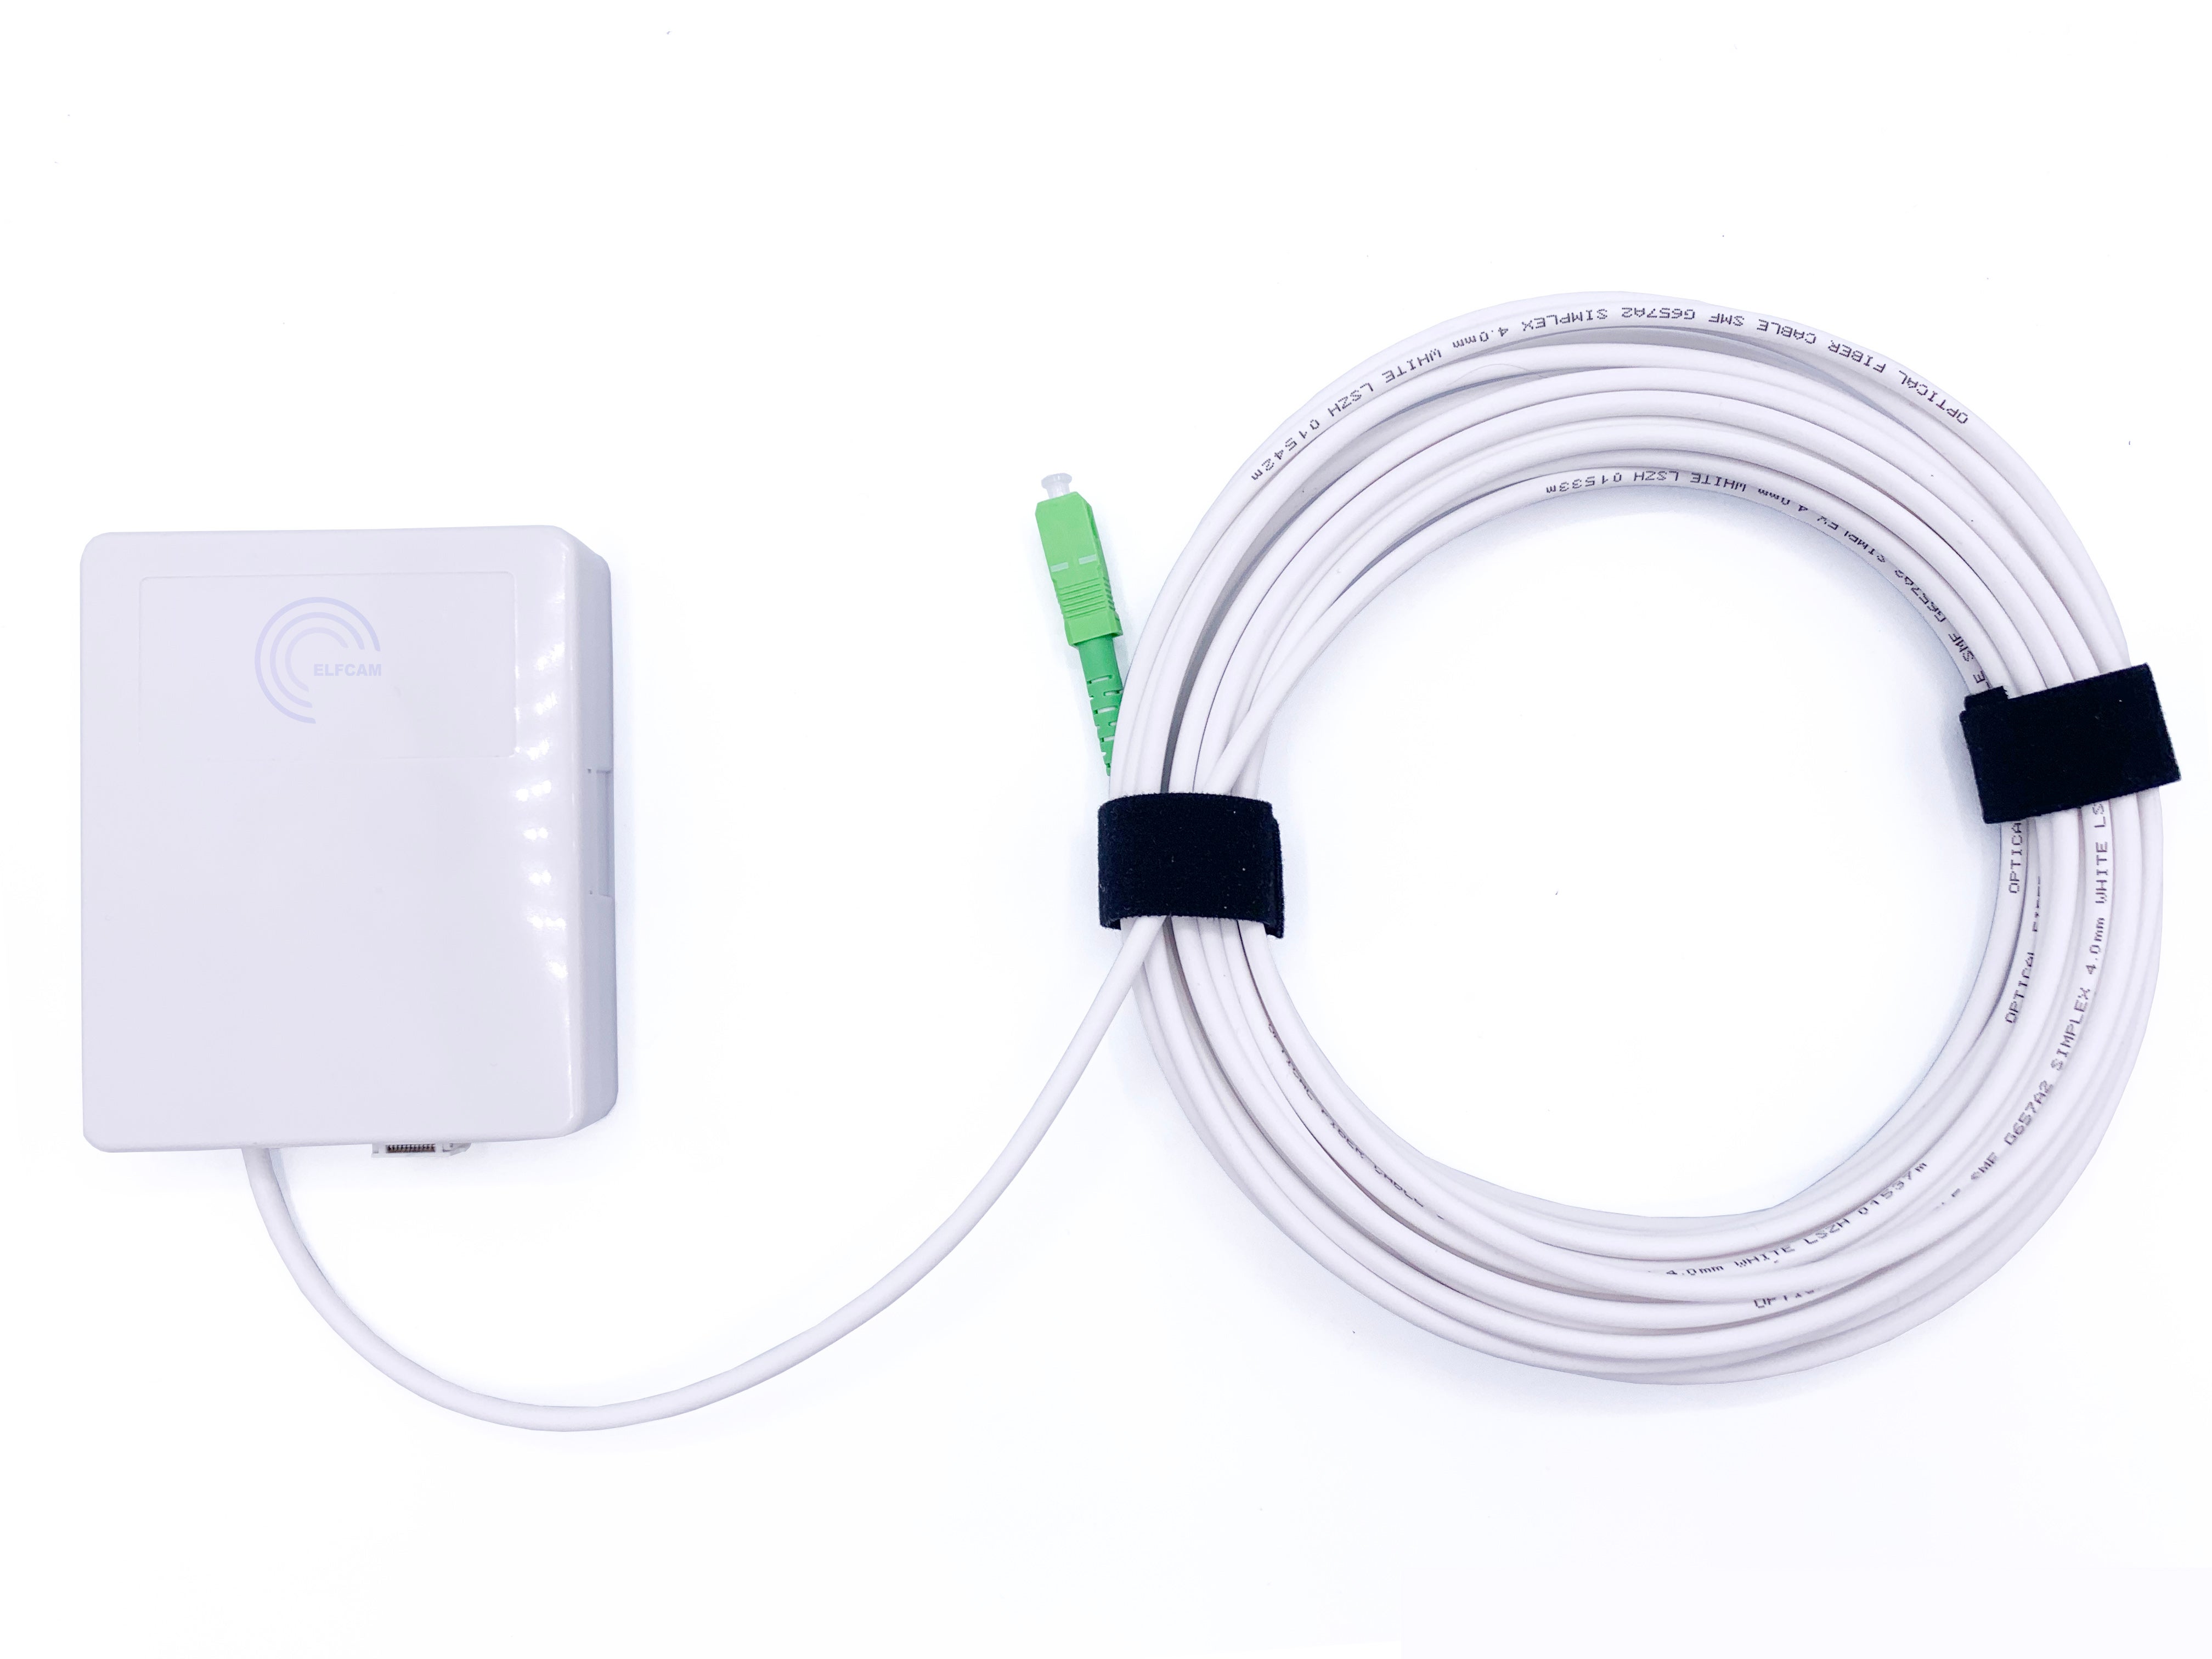 Câble fibre optique pour livebox, sfr box et bbox 10m00 - Conforama